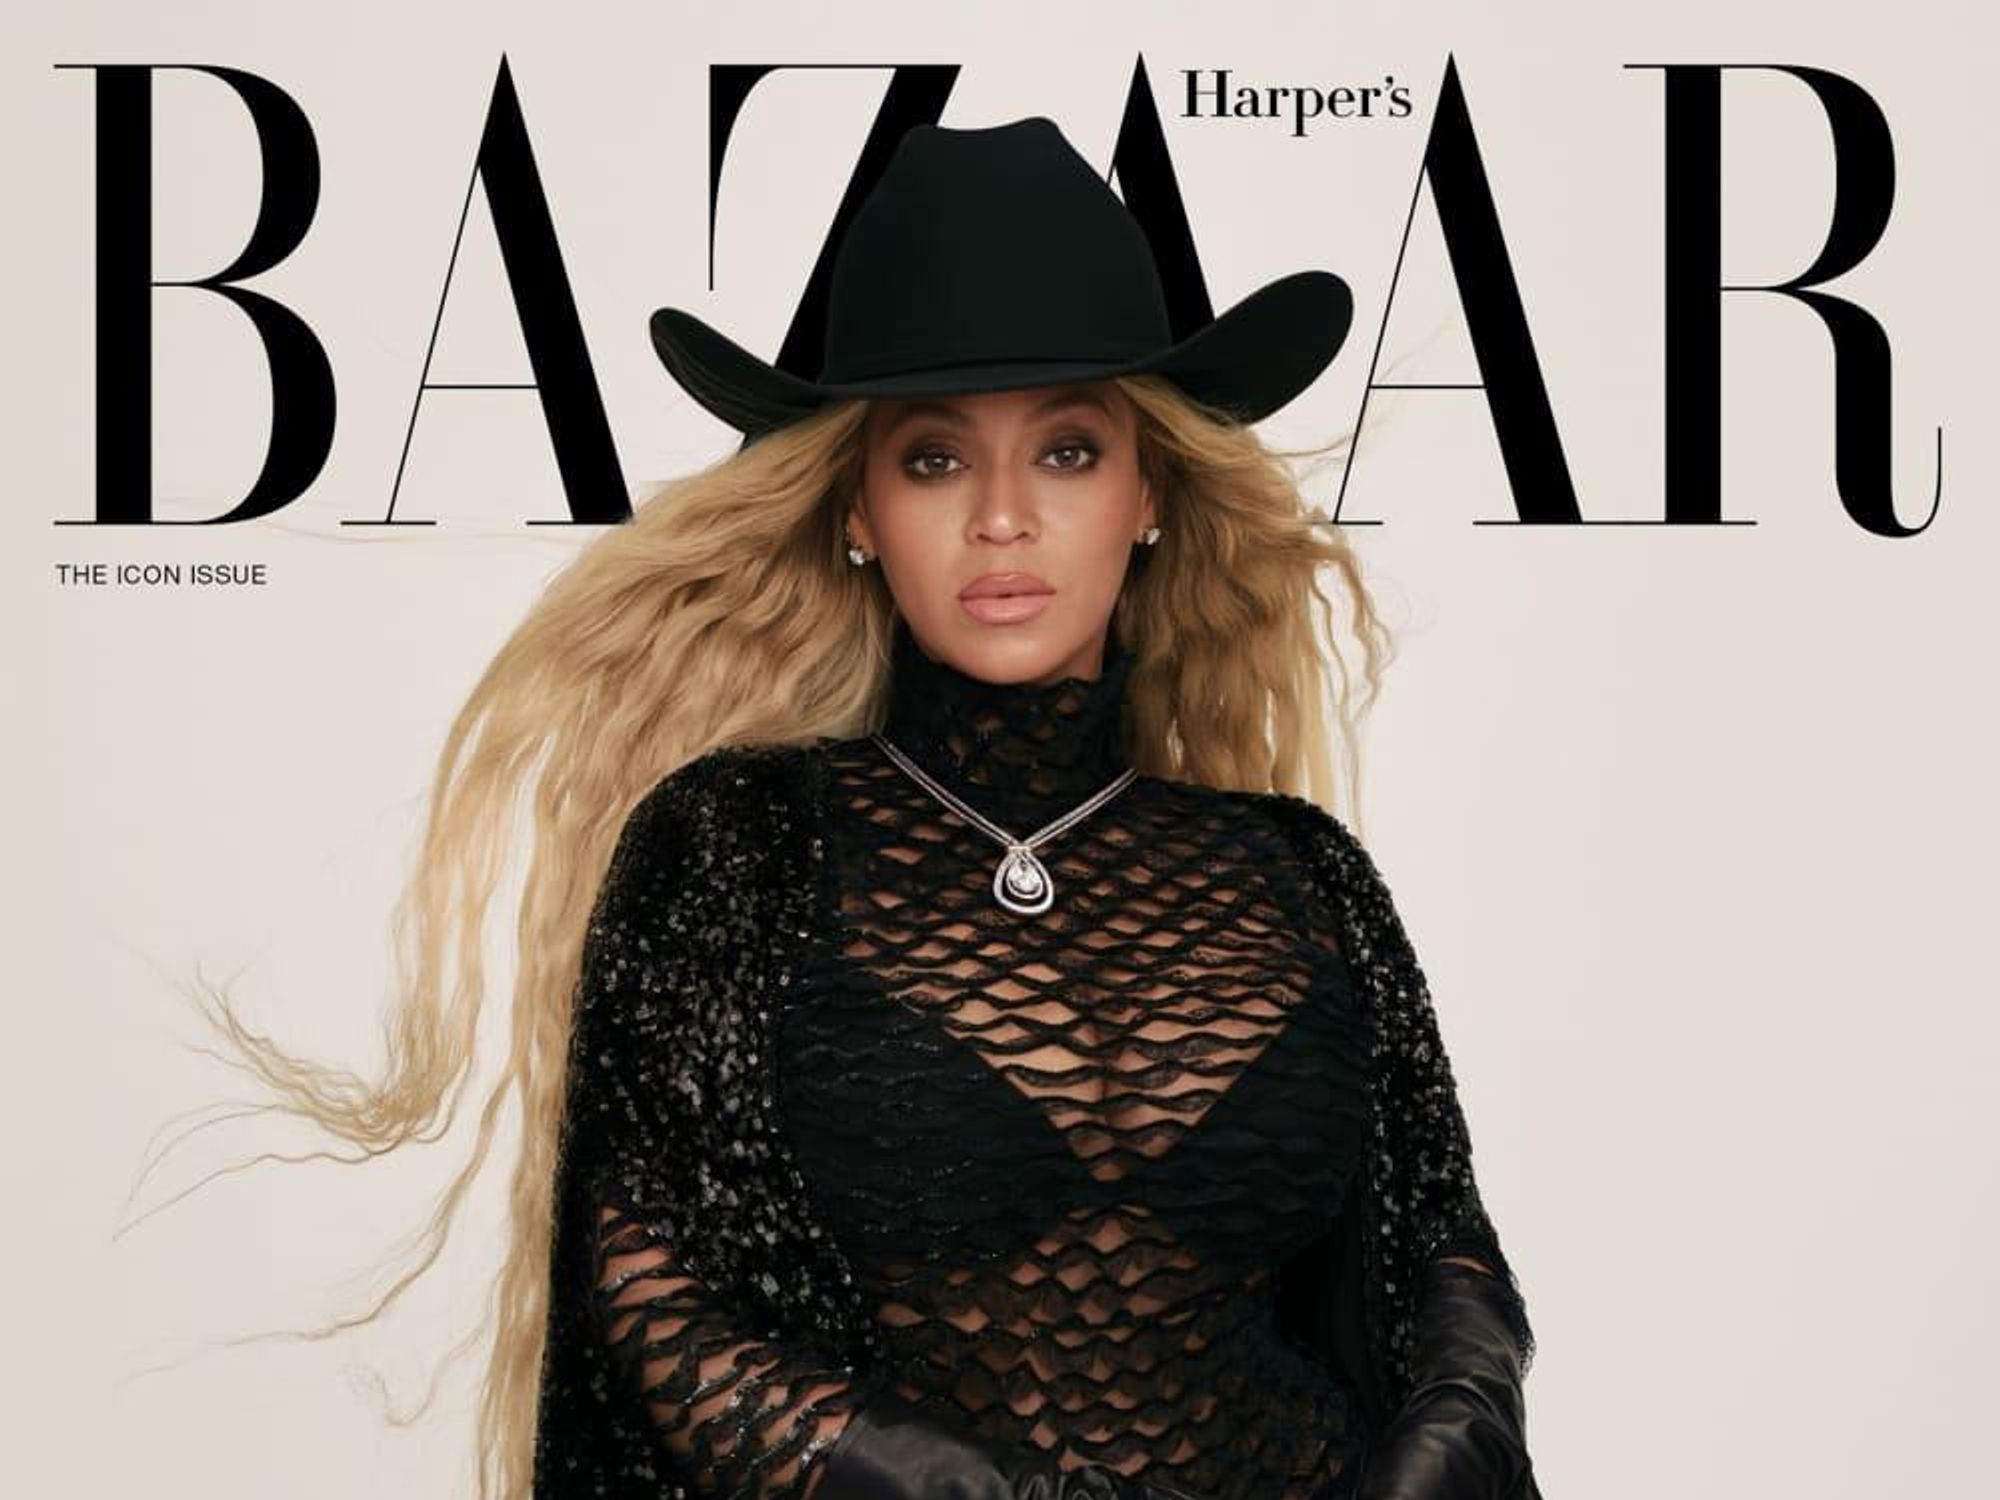 Beyonce beyoncé harper's bazaar cover